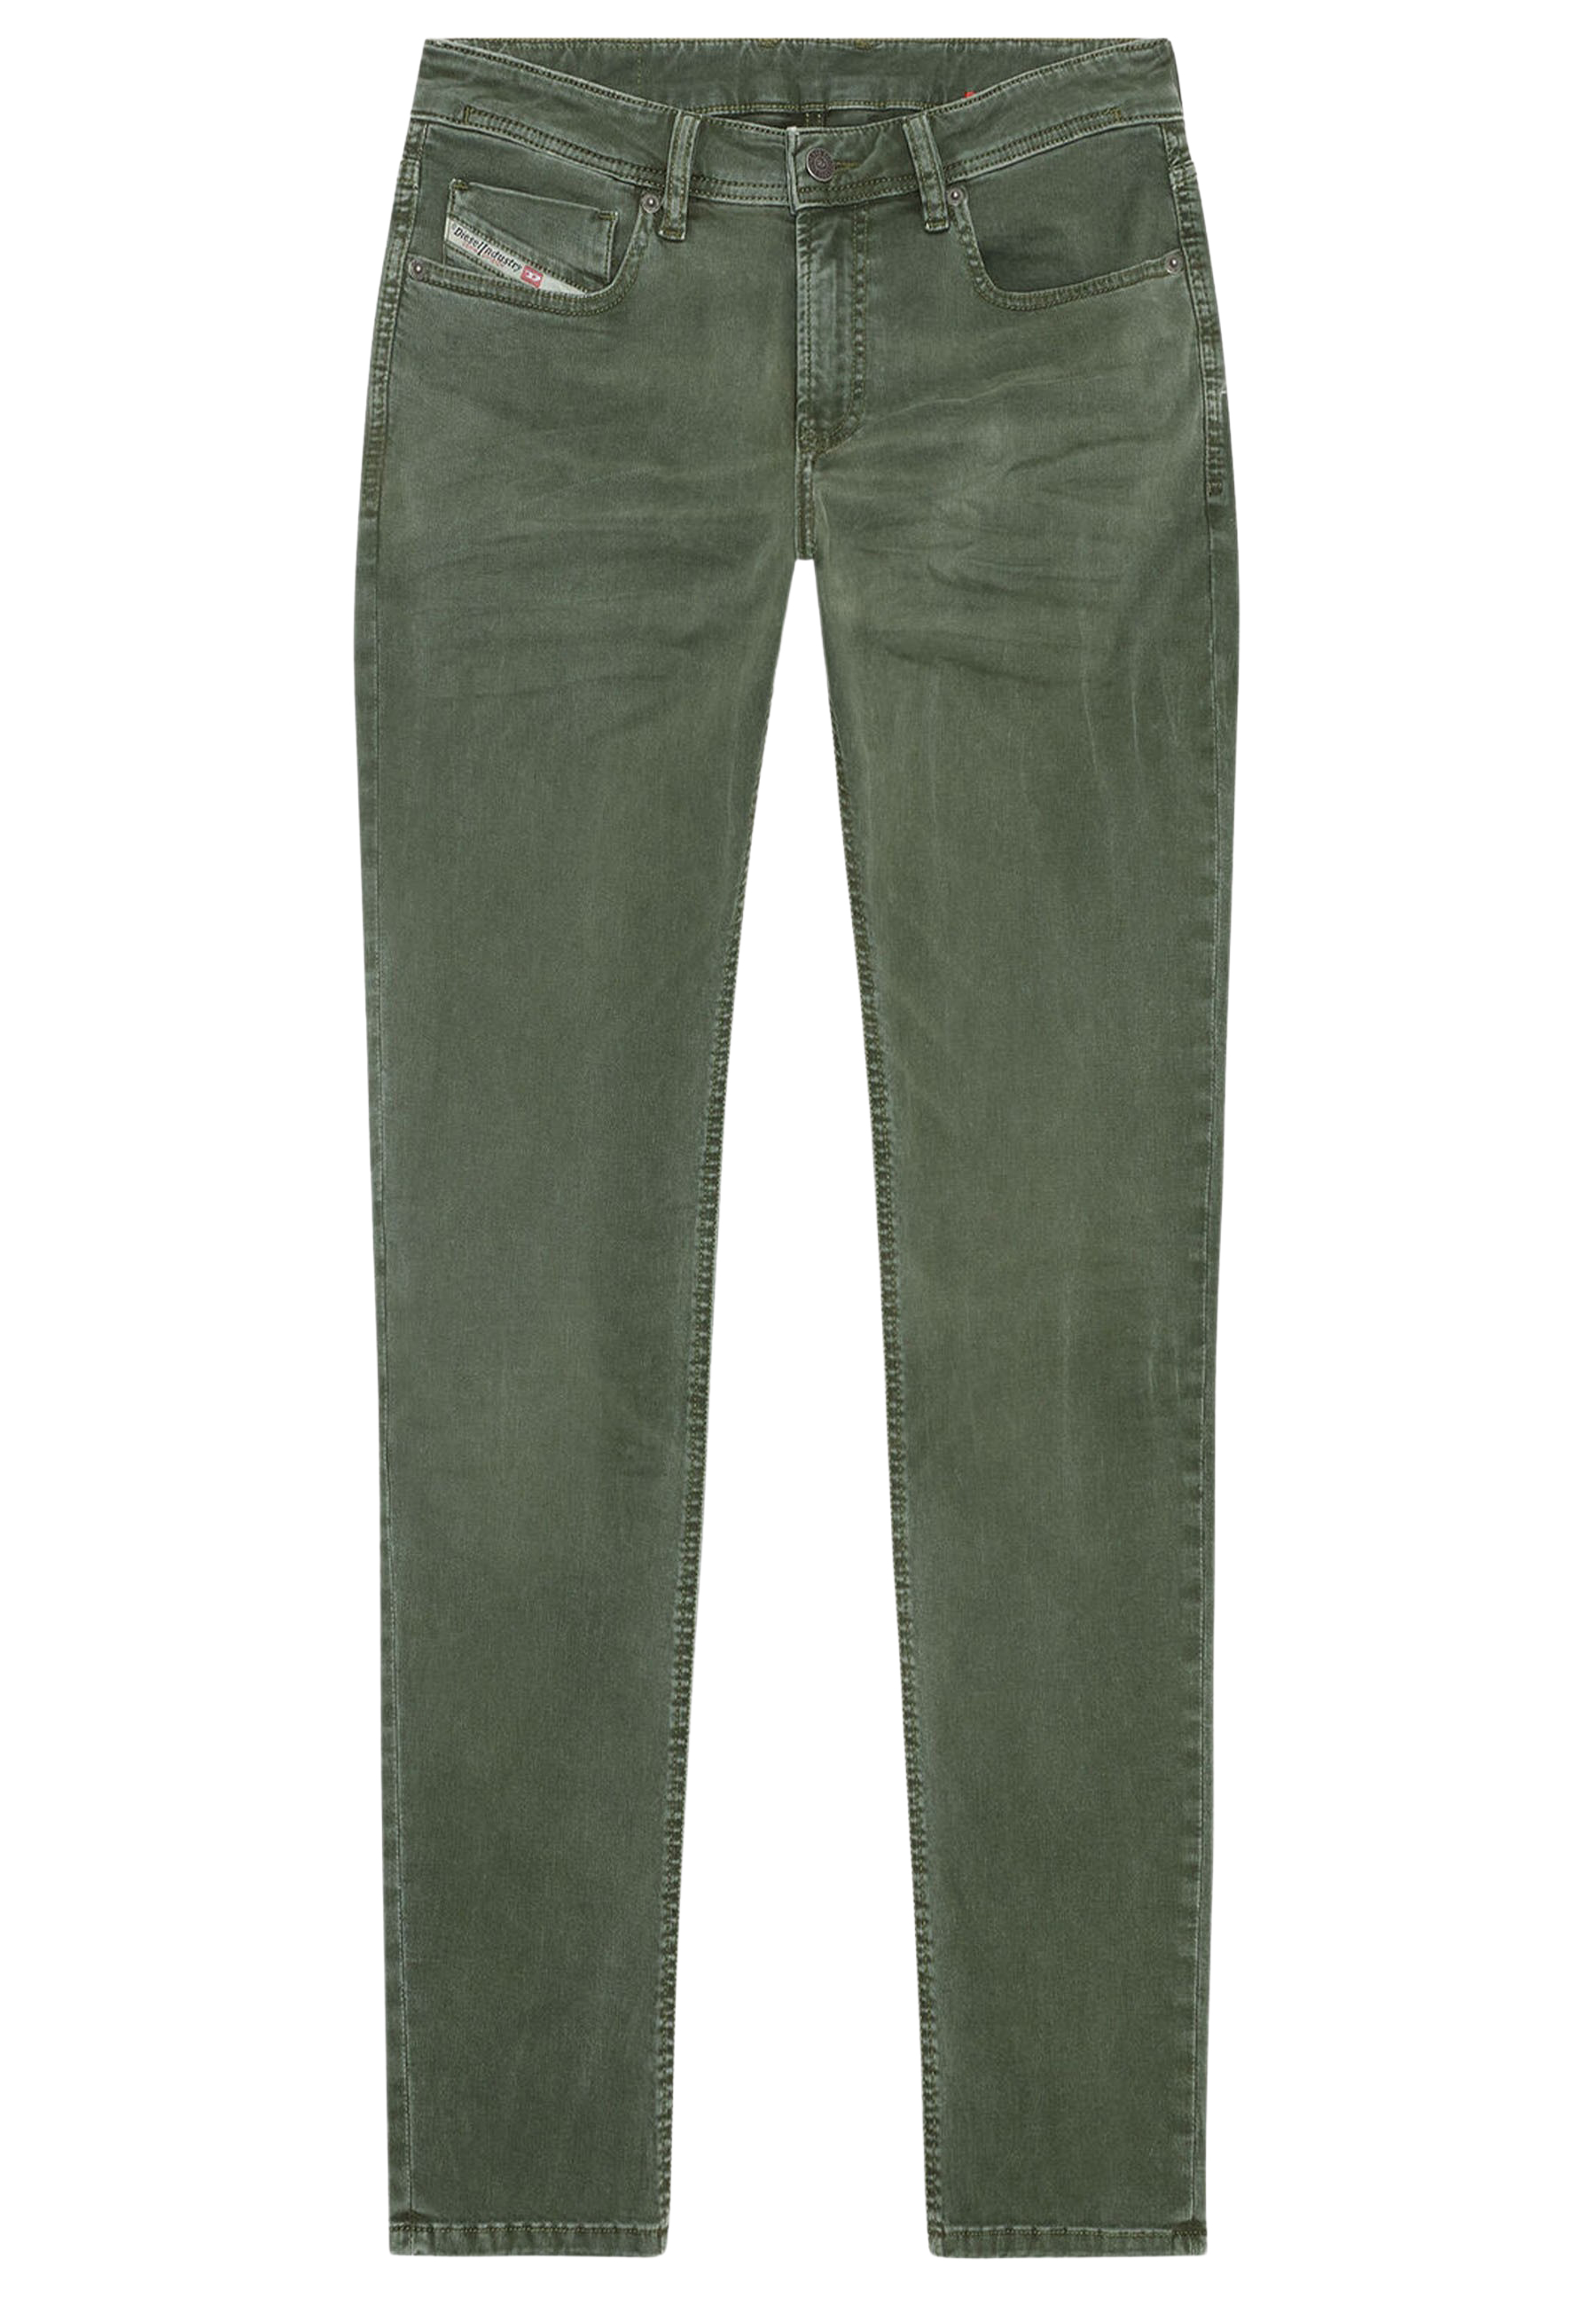 Diesel jeans groen Heren maat 34/32